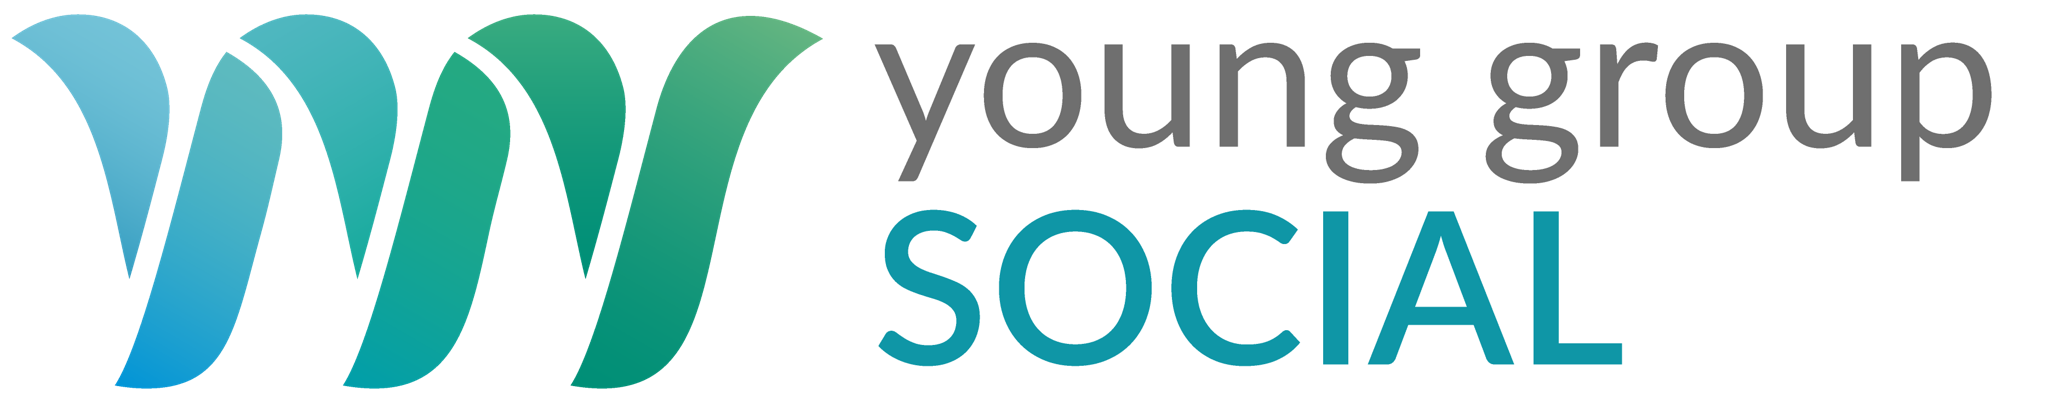 Янг групп. YOUSOCIAL логотип. Компания Booyoung Group. Young Society. Project Group logo.